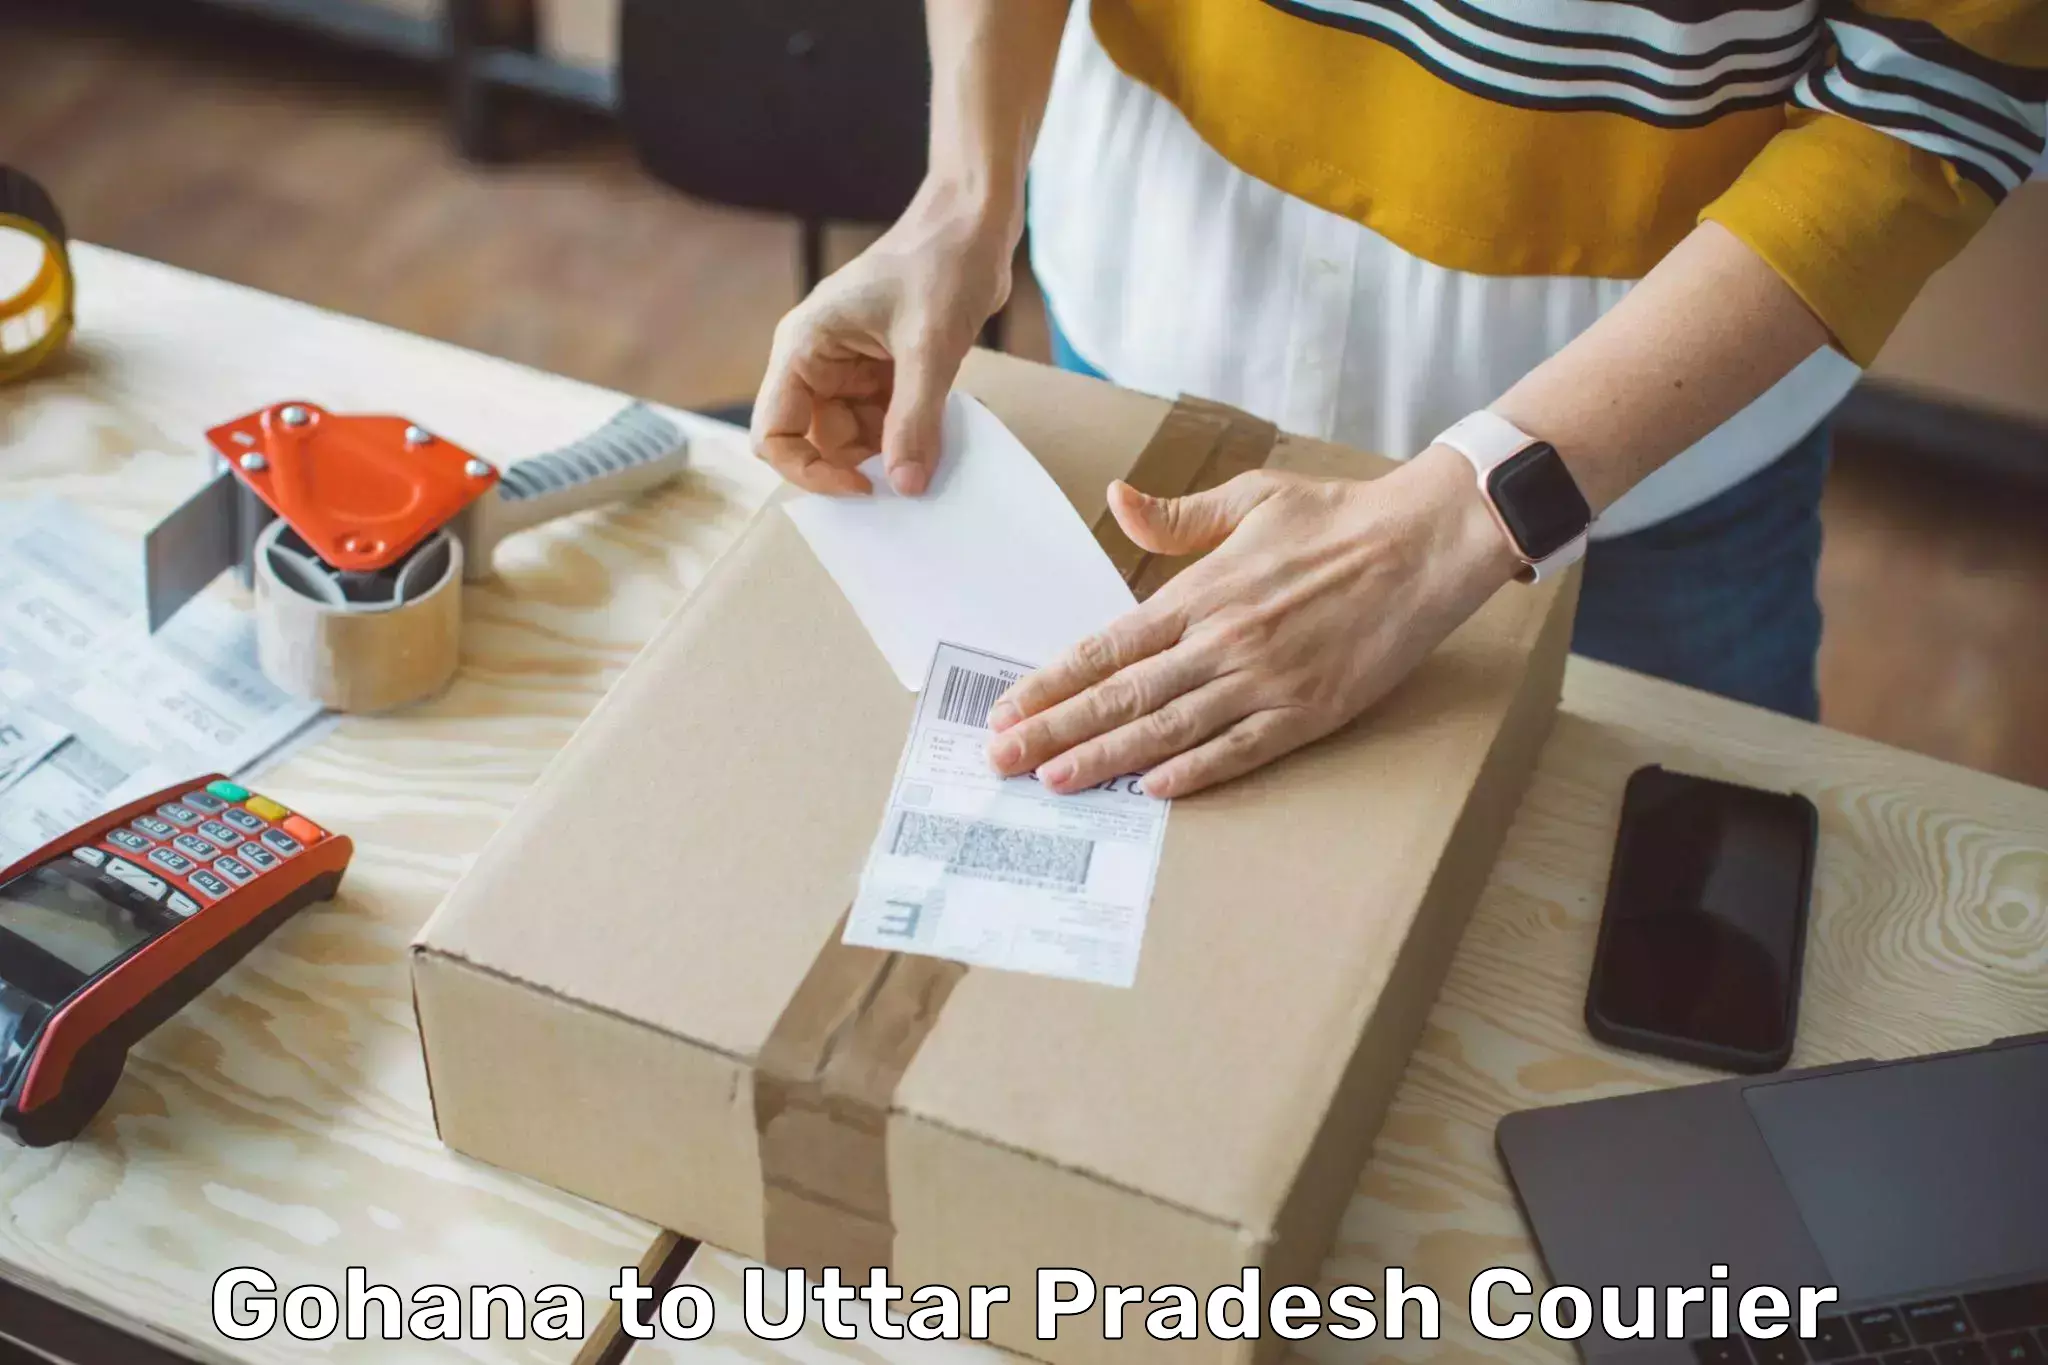 Customer-focused courier Gohana to Uttar Pradesh